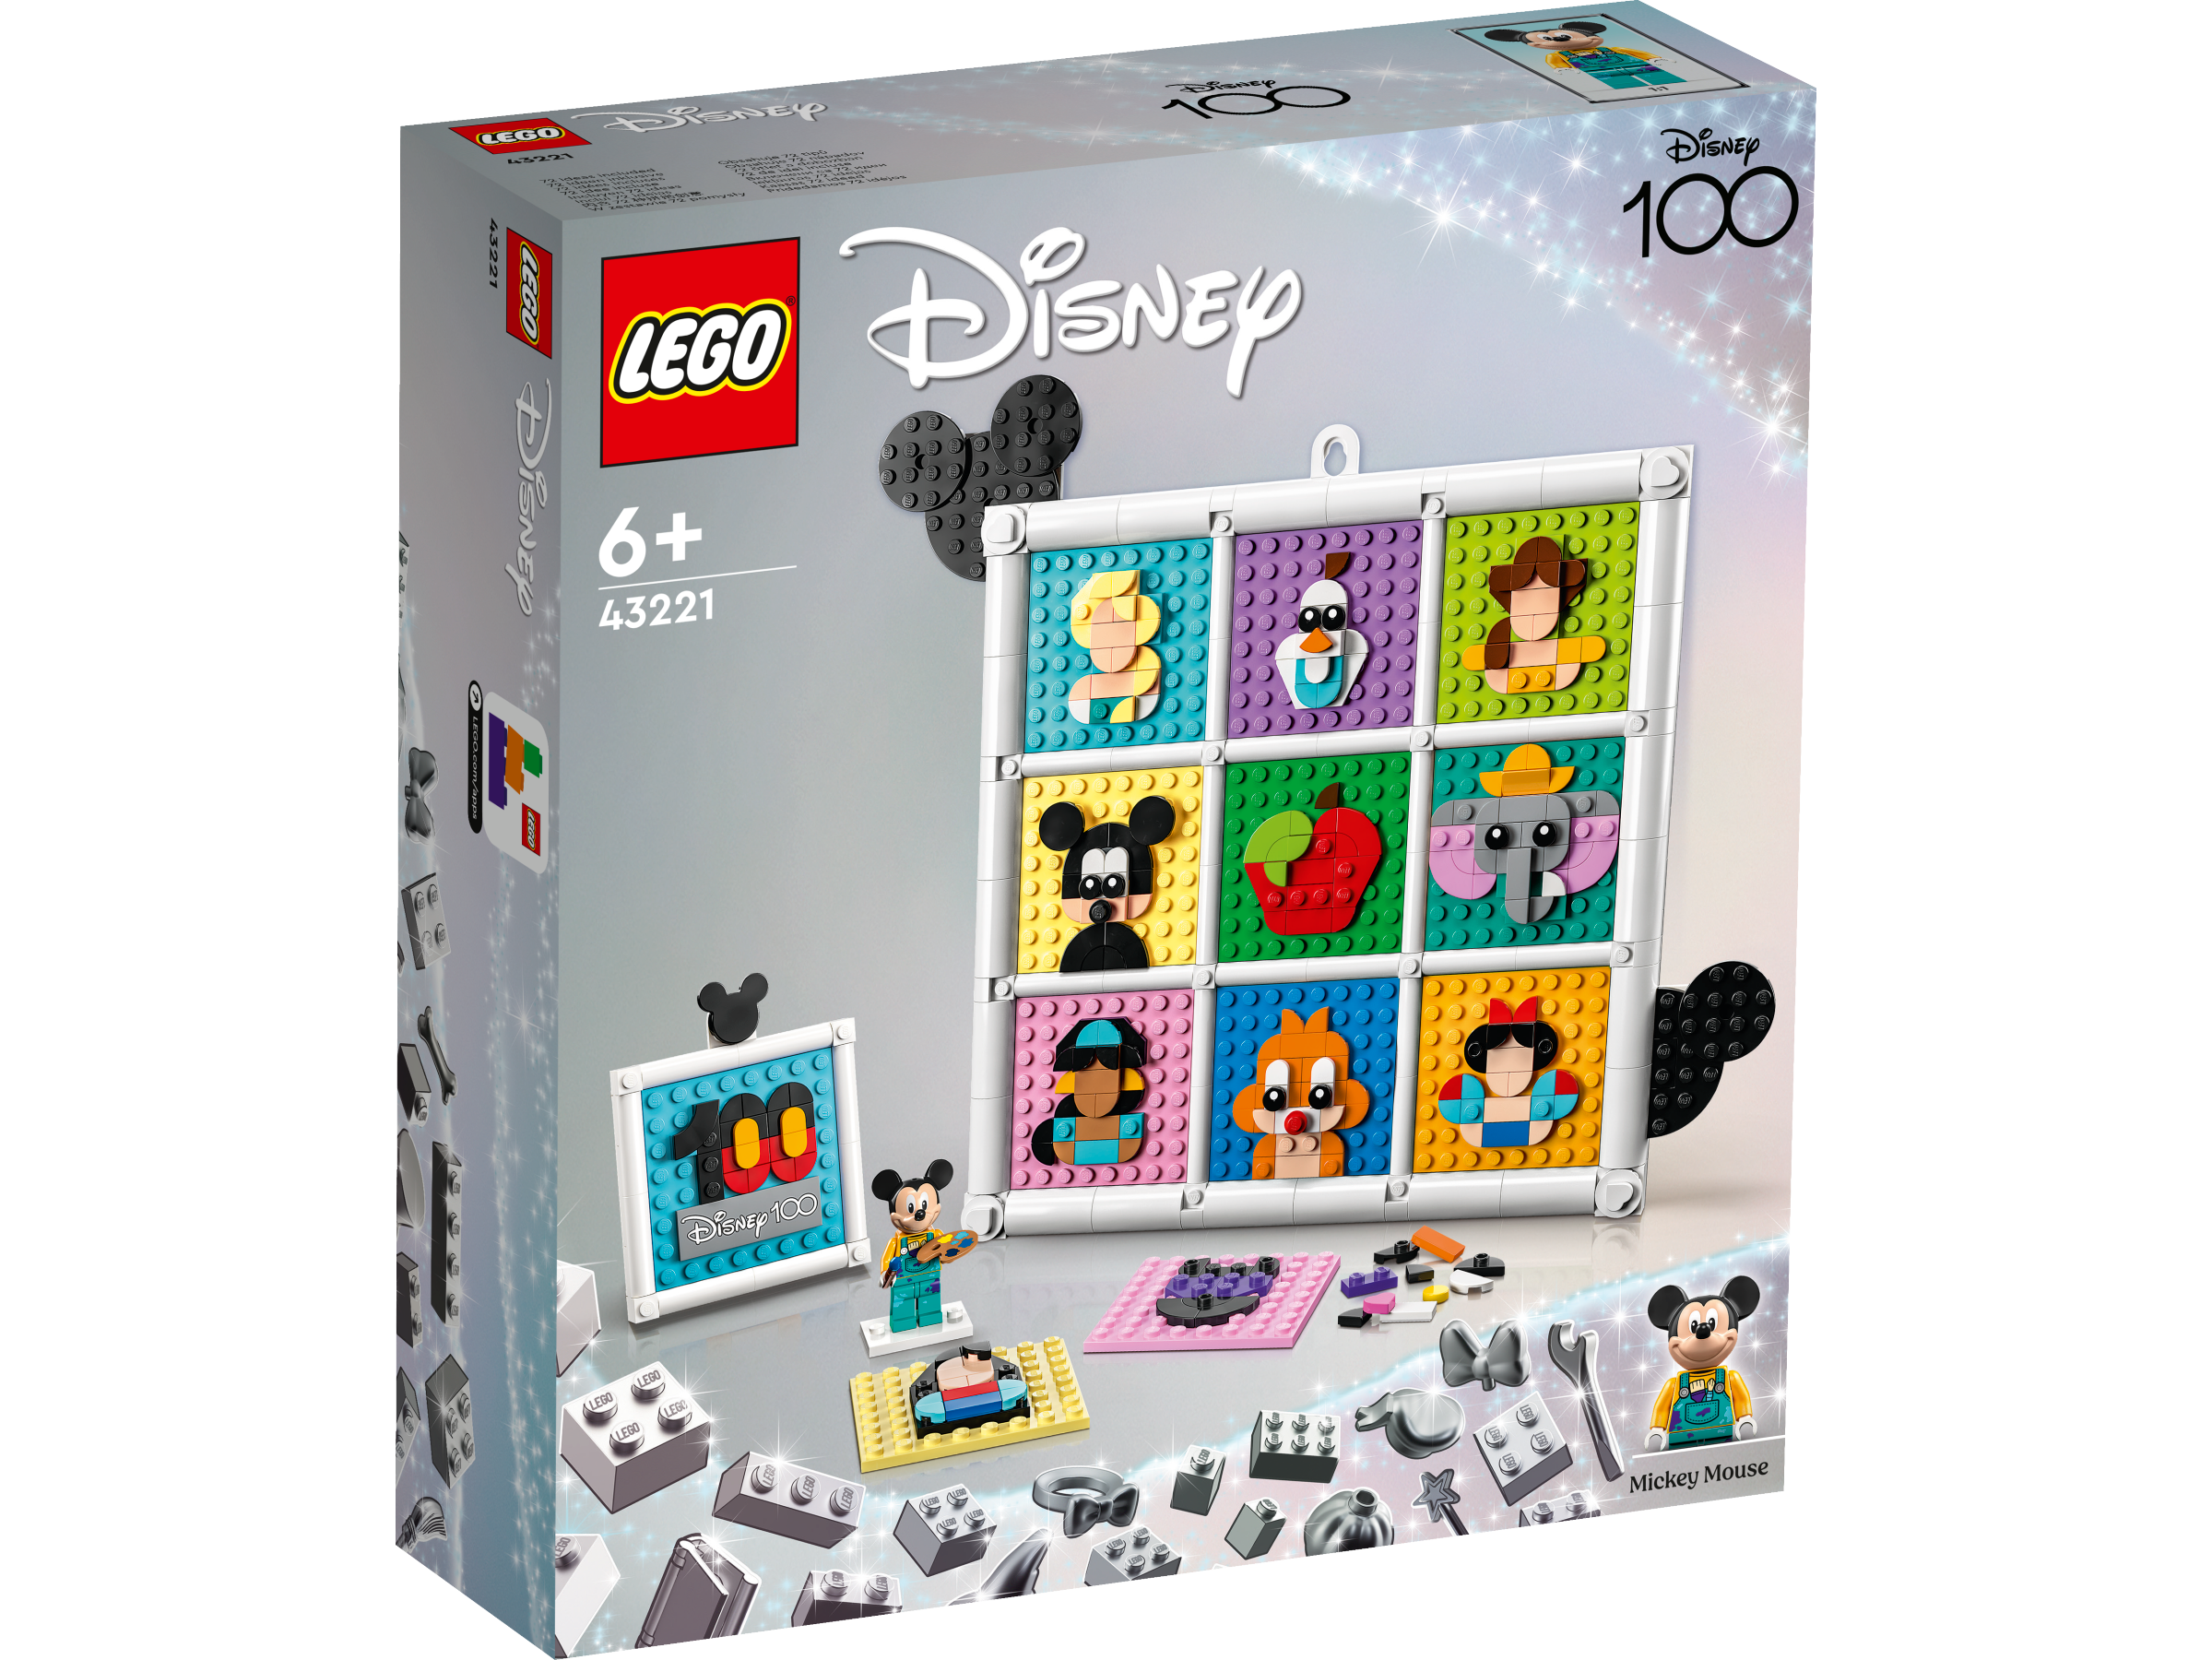 Lego 43221 100 Years of Disney Animation